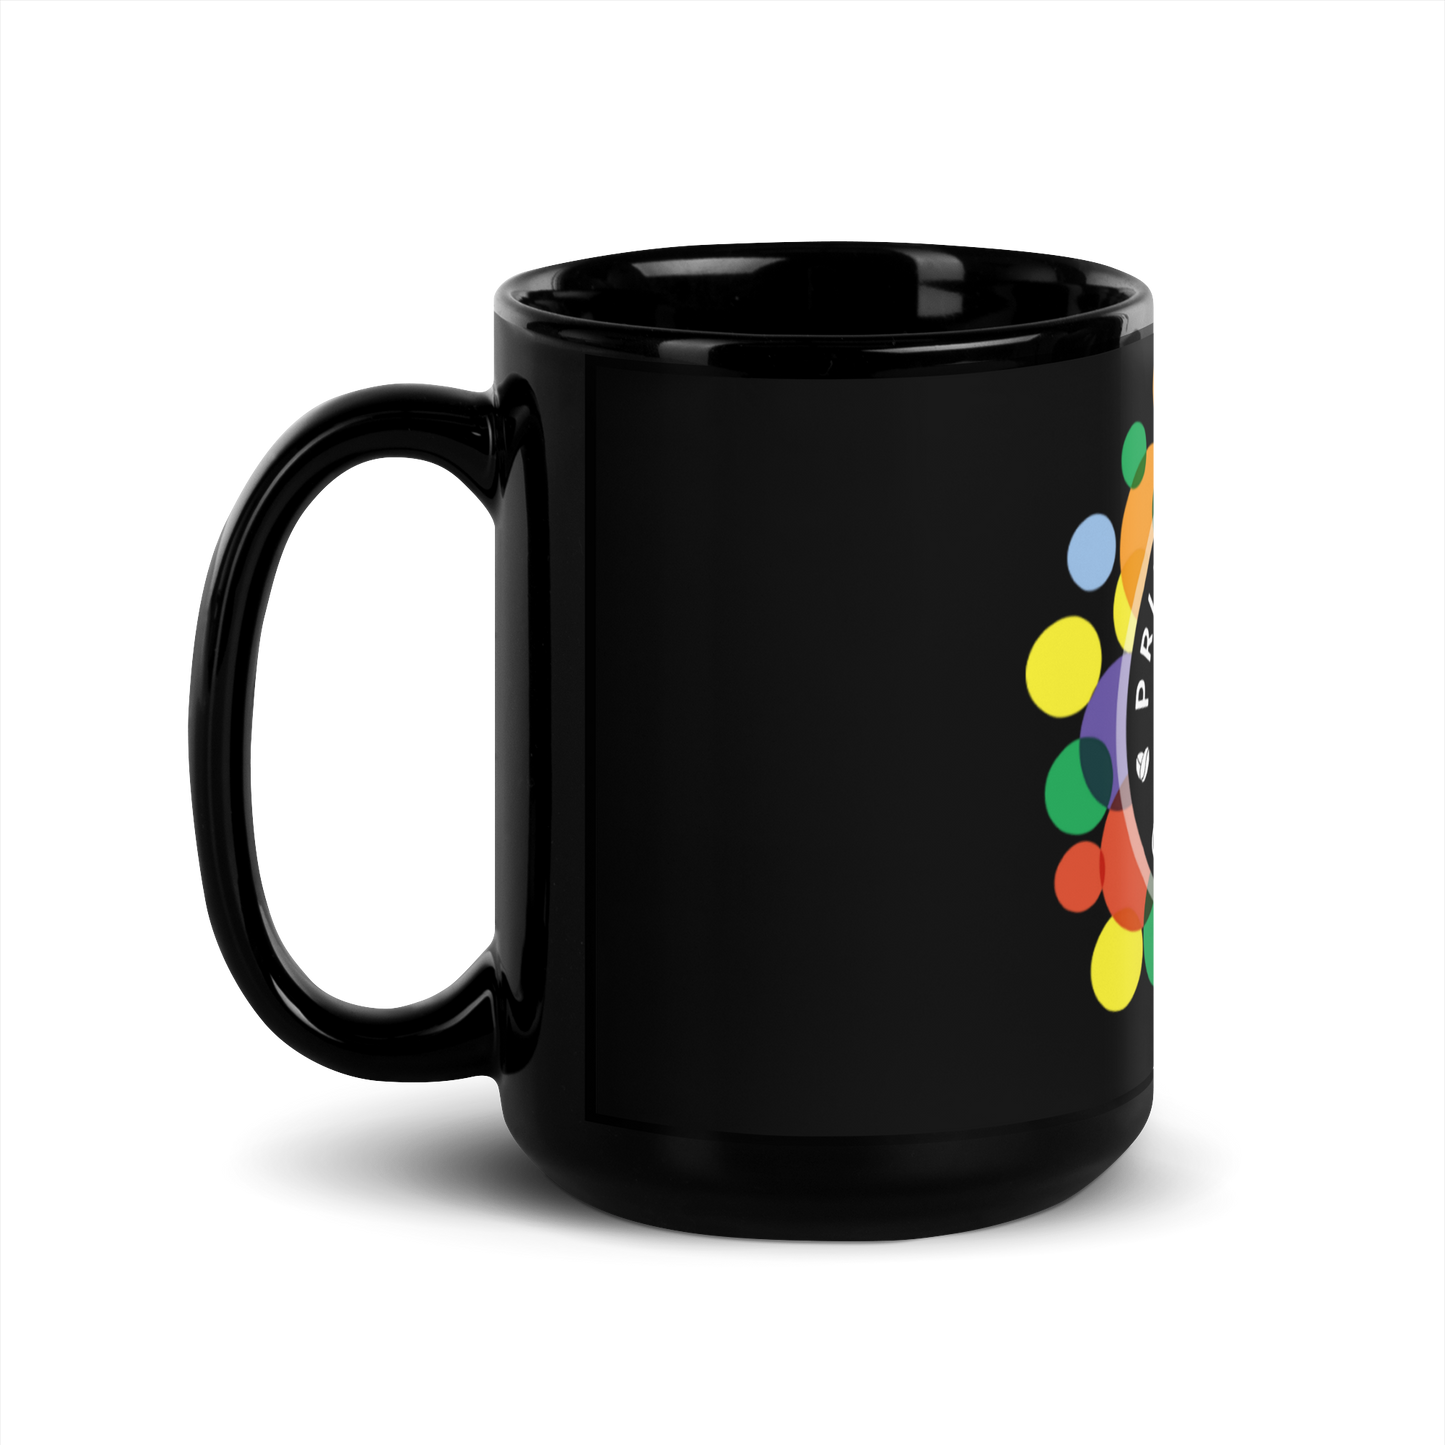 Pride Roast Coffee Black Glossy Mug